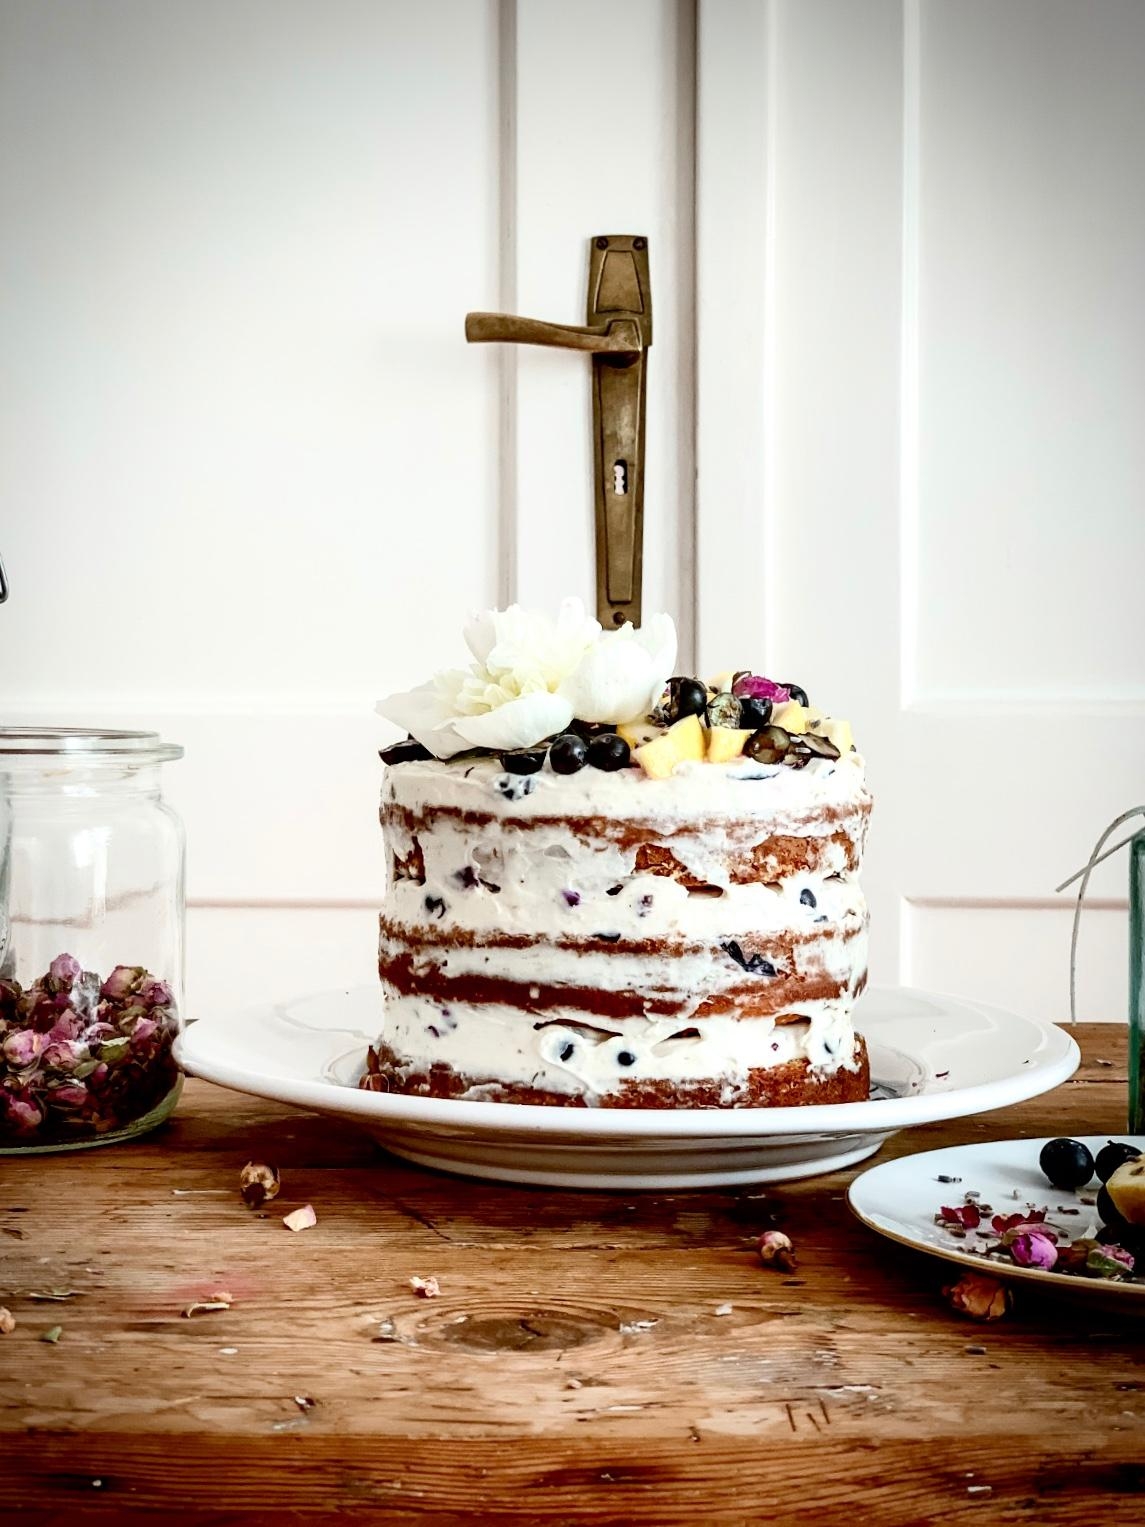 #happysunday #cake #cakelove #nakedcake #couchliebt #kuchenliebe #kuchendeko #freshflowers #fruits